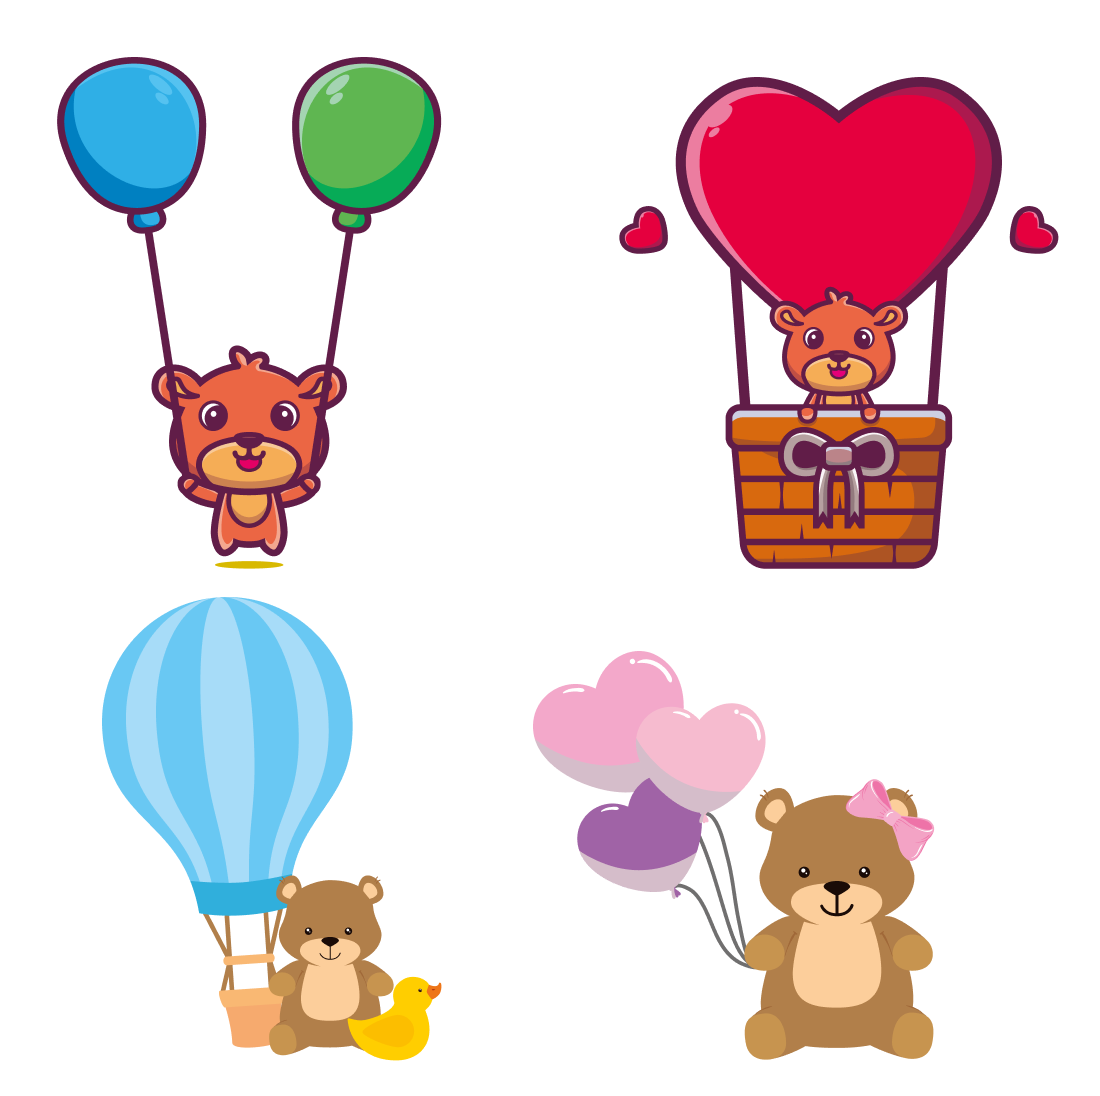 Couple of teddy bears flying in a hot air balloon.